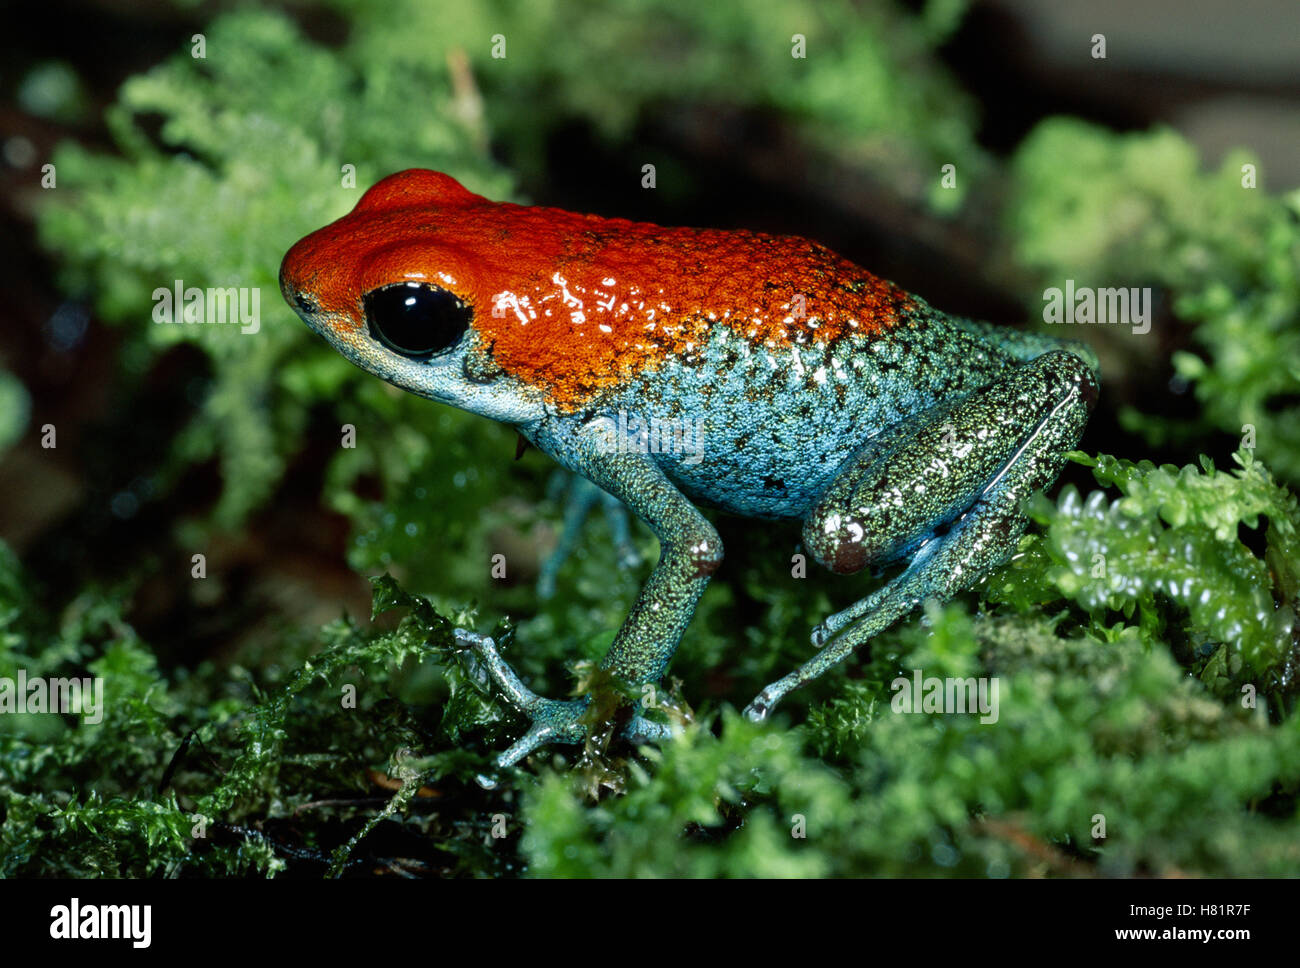 Granular Poison Dart Frog (Dendrobates granuliferus) portrait on moss in rainforest, Osa Peninsula, Costa Rica Stock Photo